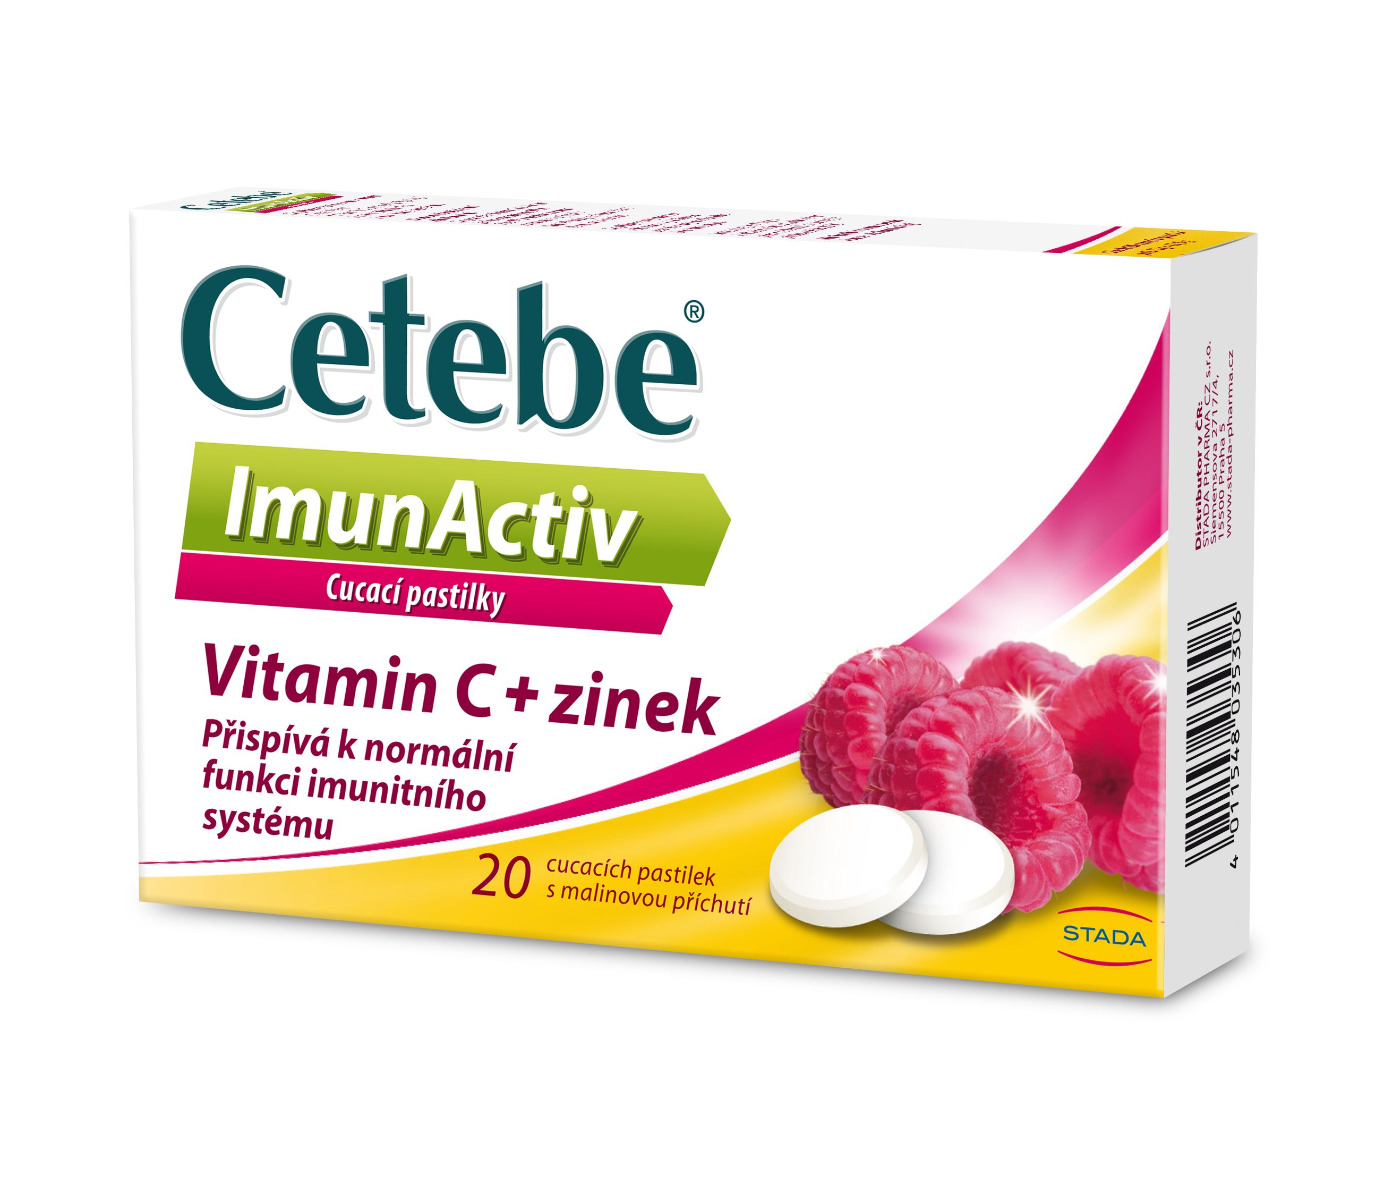 Cetebe ImunActiv Vitamin C + zinek 20 cucavých pastilek Cetebe